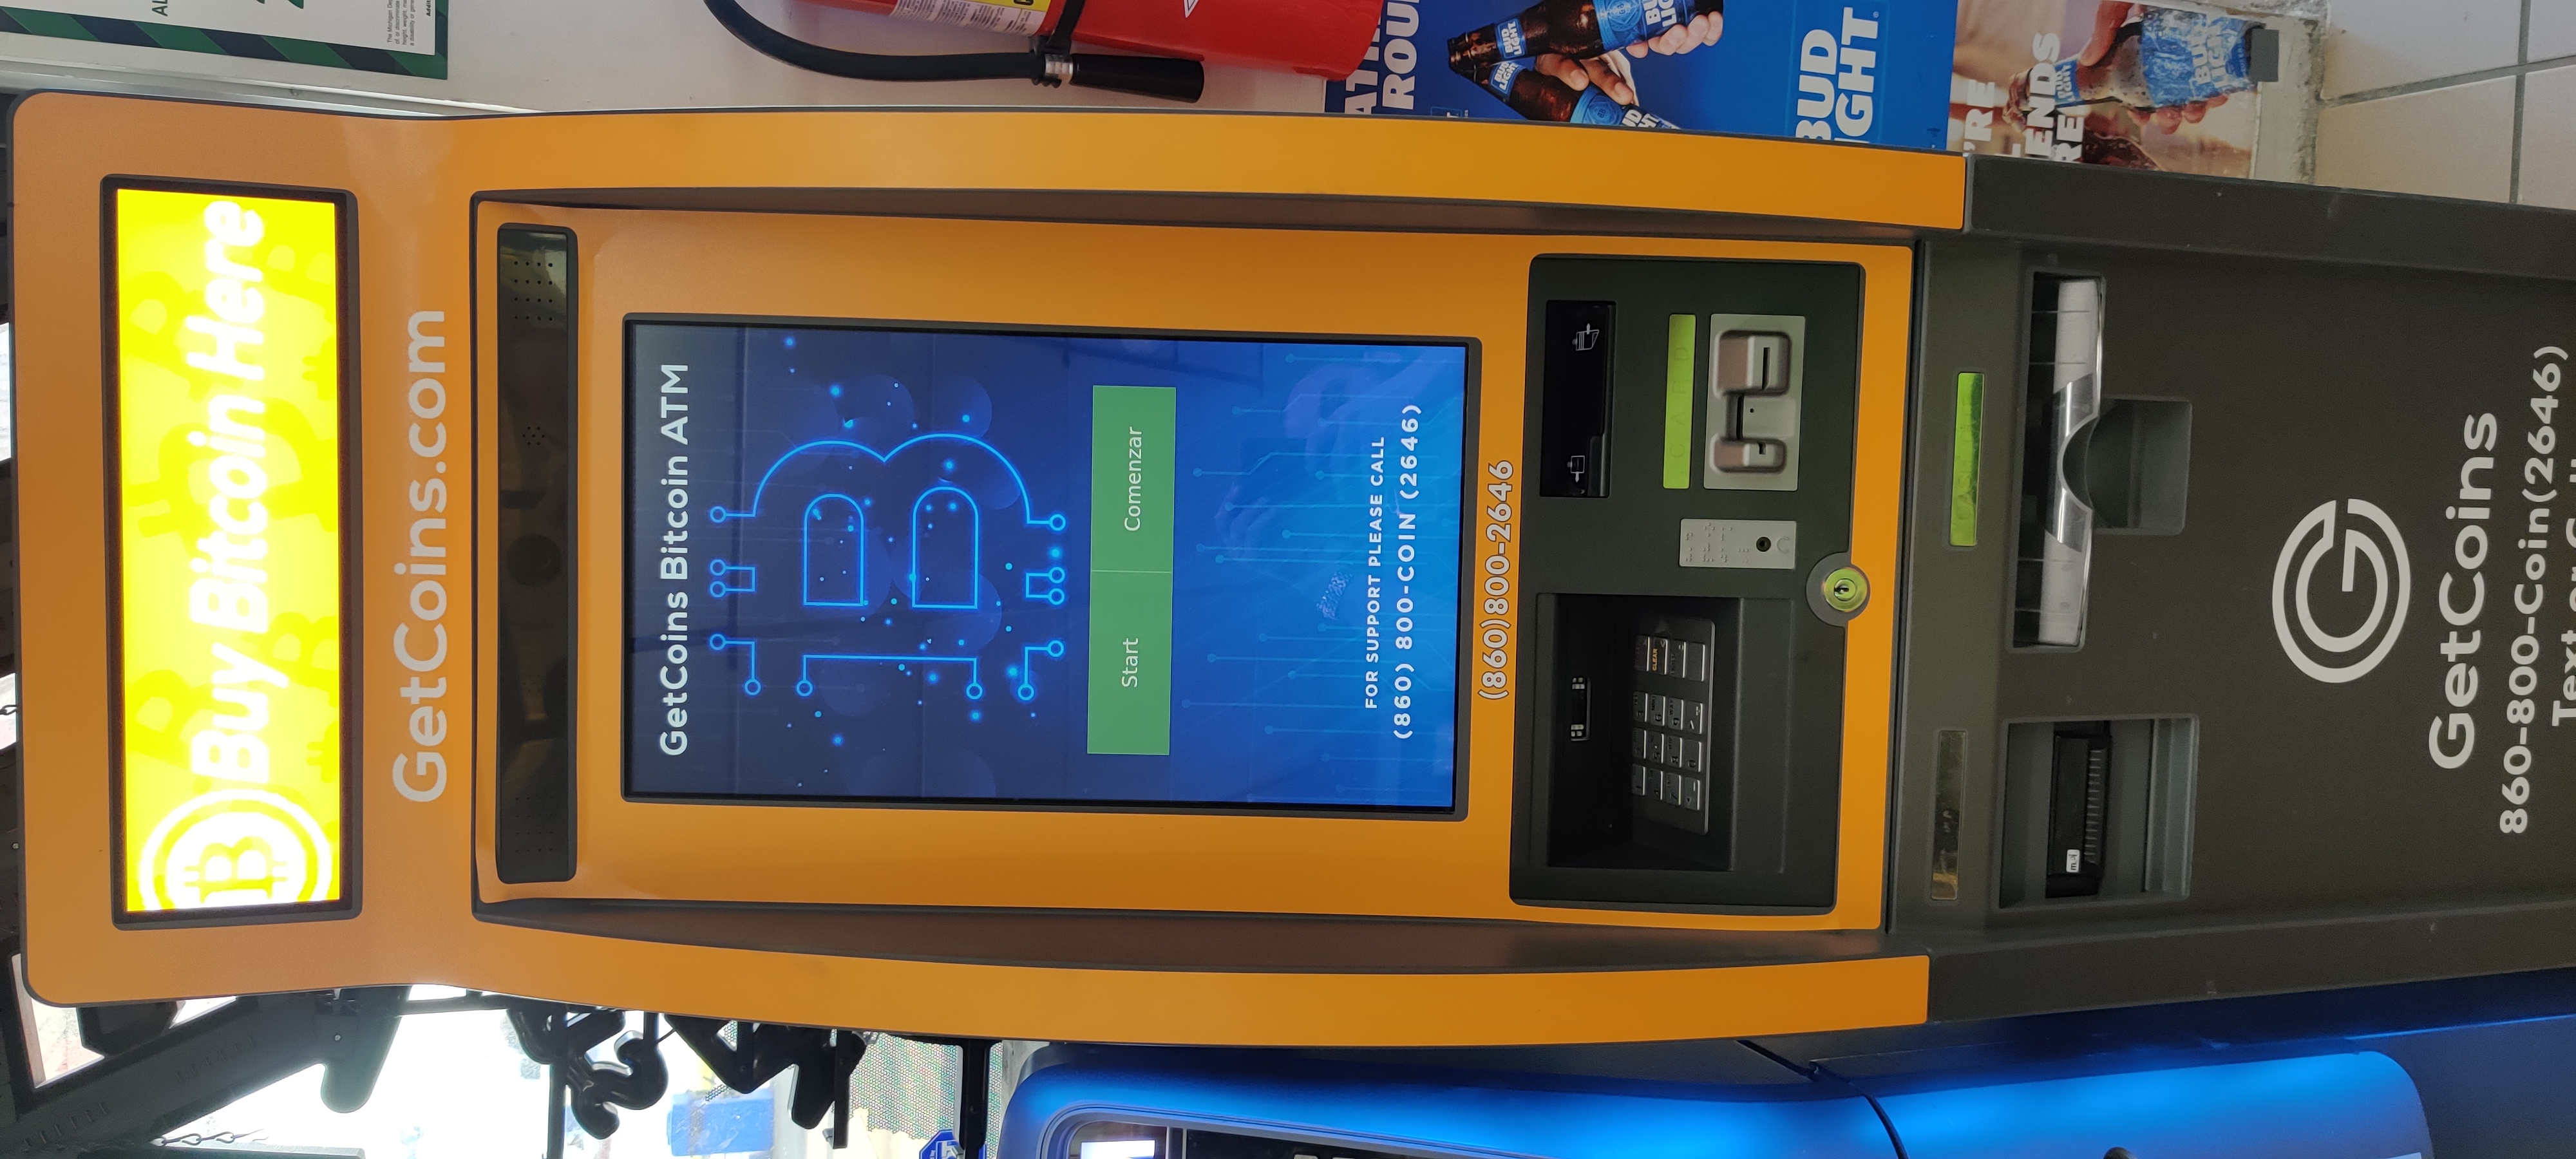 Getcoins - Bitcoin ATM - Inside of Marathon in Grand Rapids, Michigan